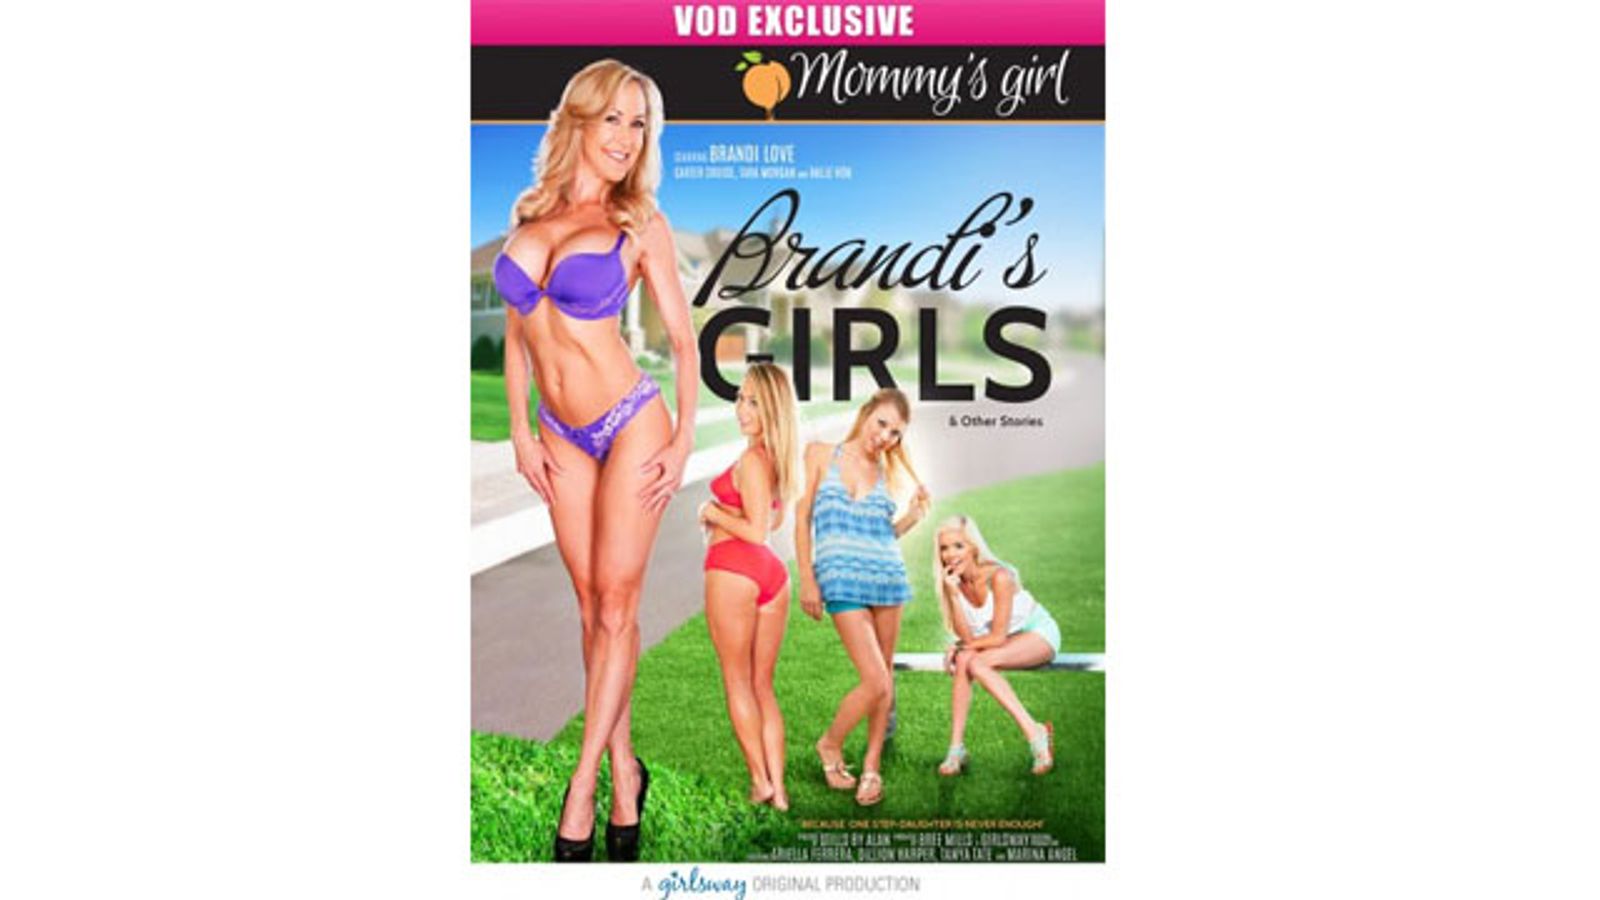 ‘Brandi’s Girls’ Exclusively Premieres On GameLink